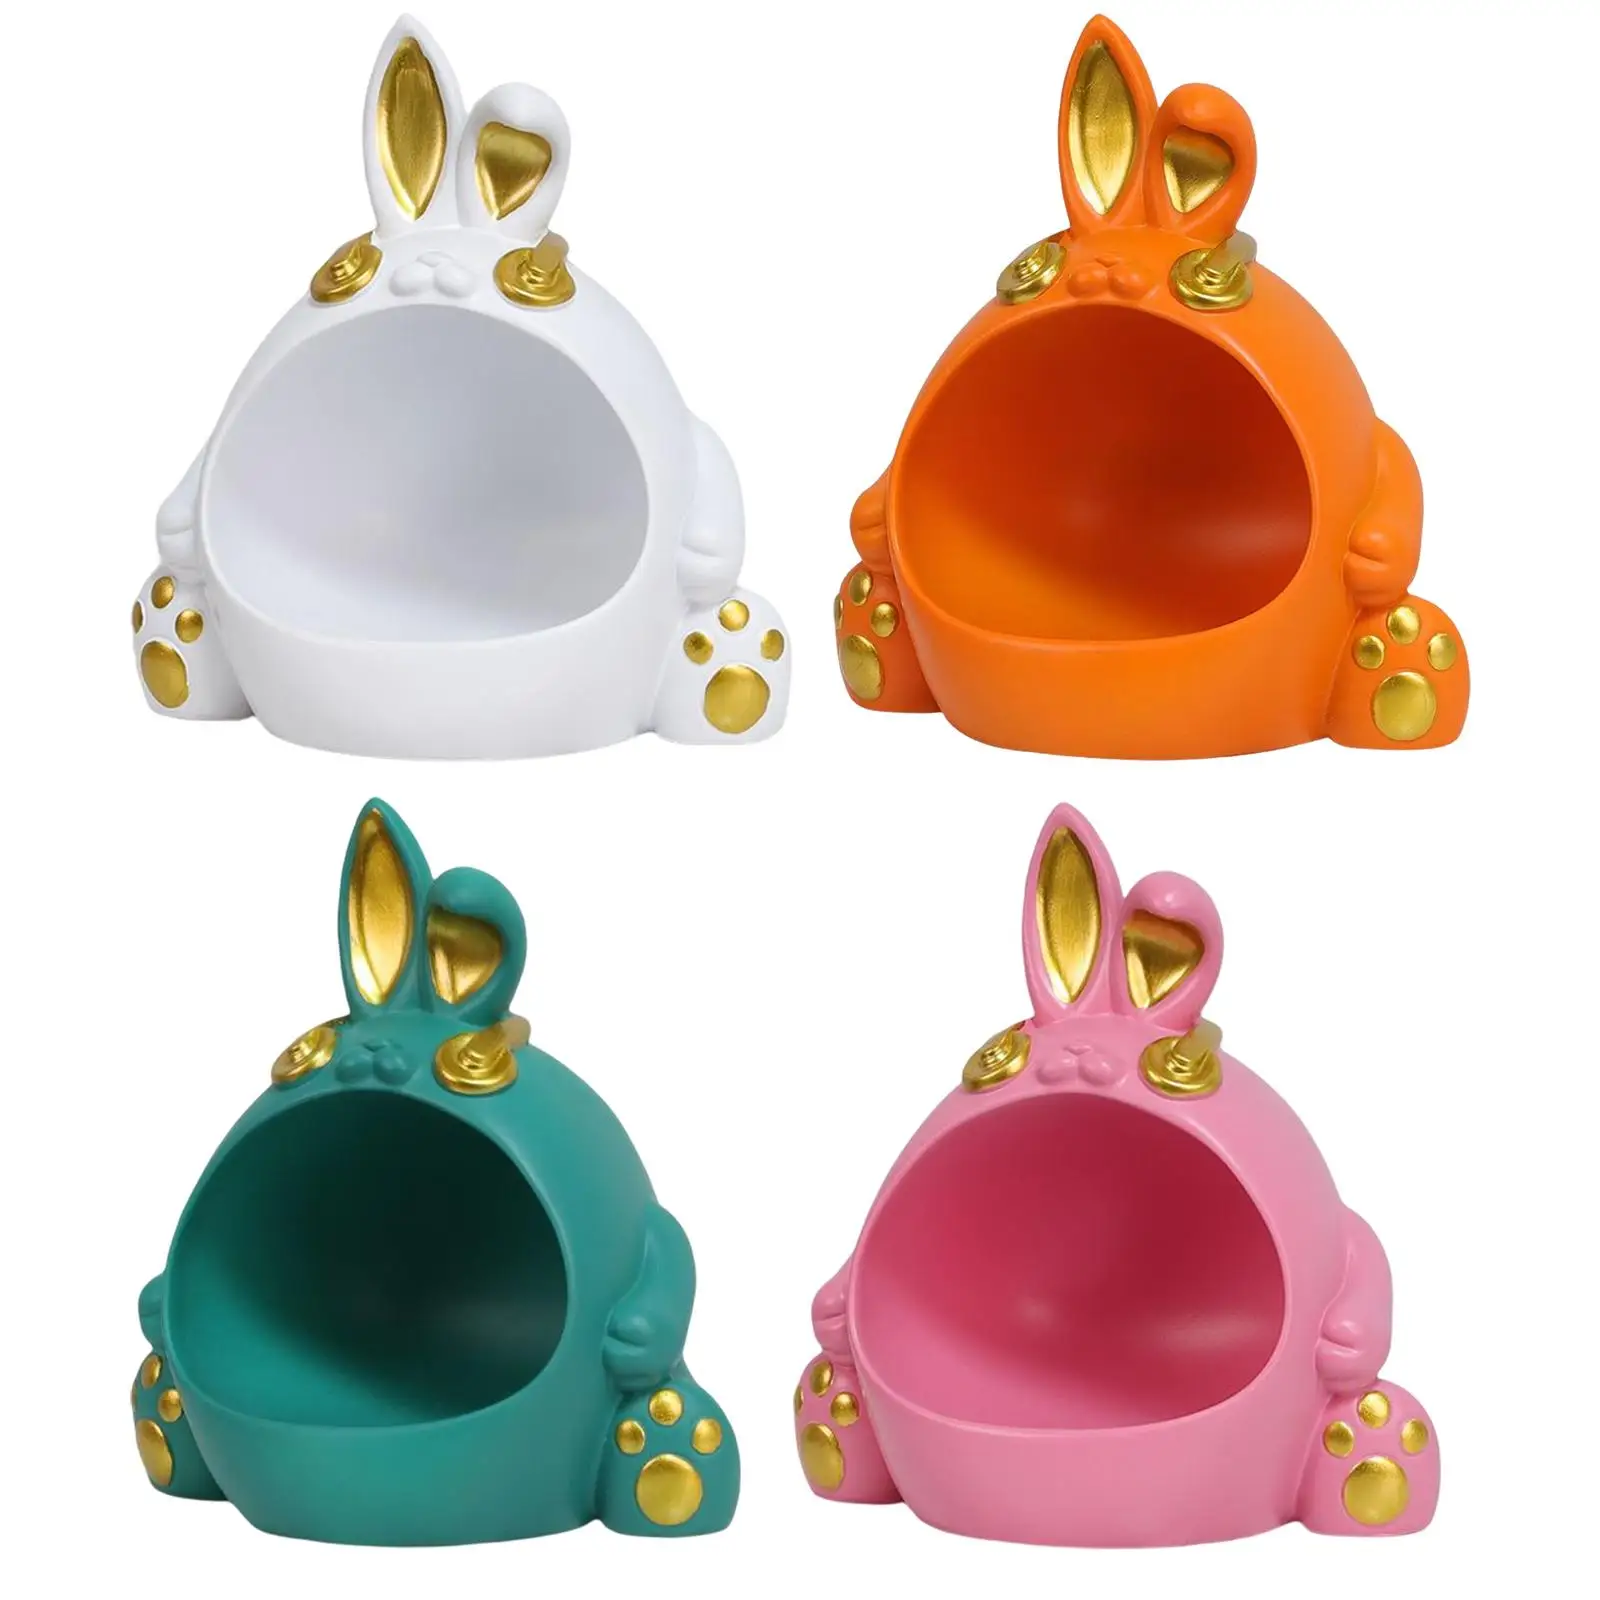 Resin Storage Box Rabbit Figurine Cute Animal for Home Decoration Ornament